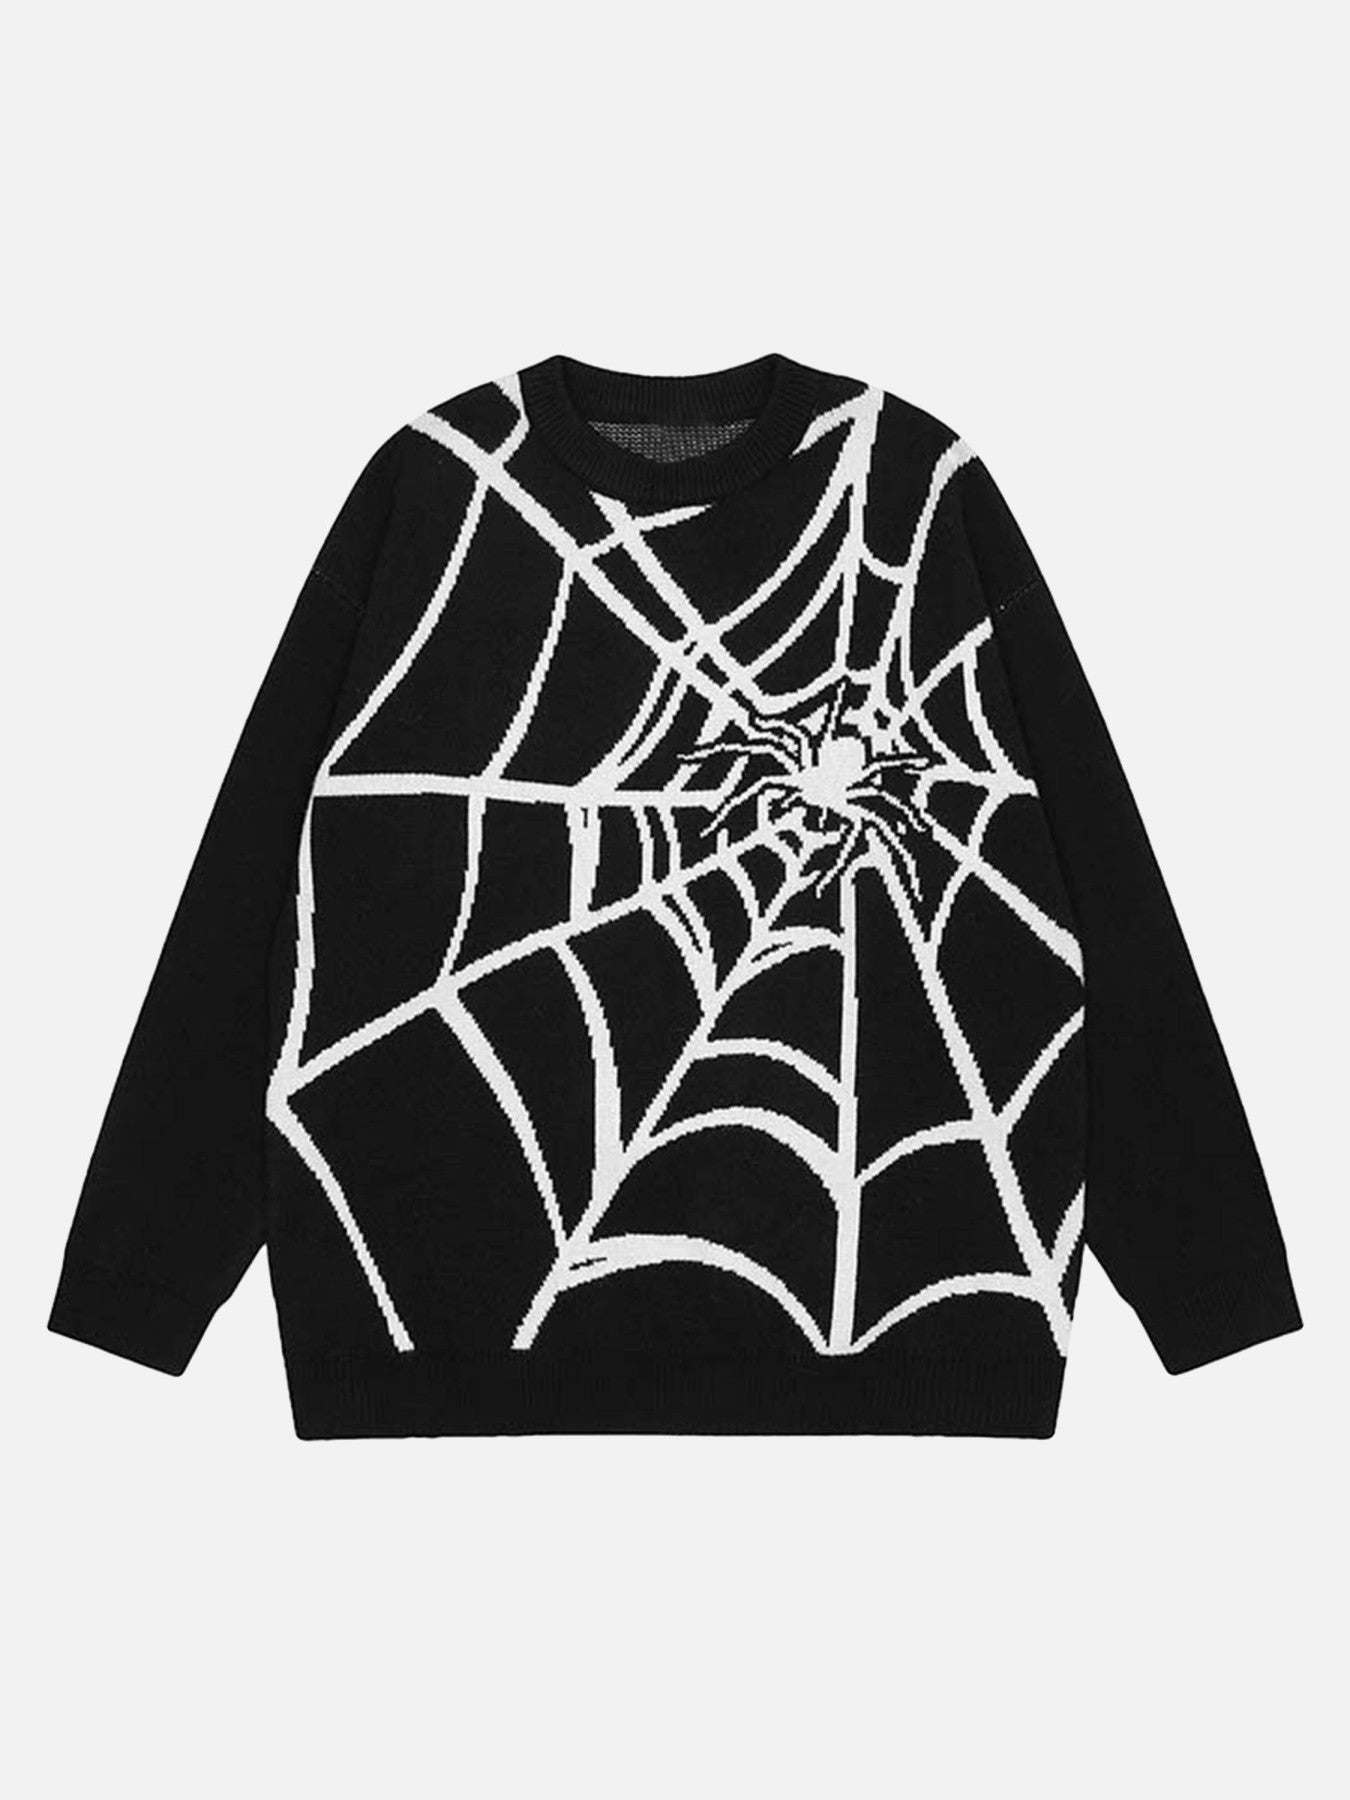 Thesupermade Spider Web Crewneck Sweater